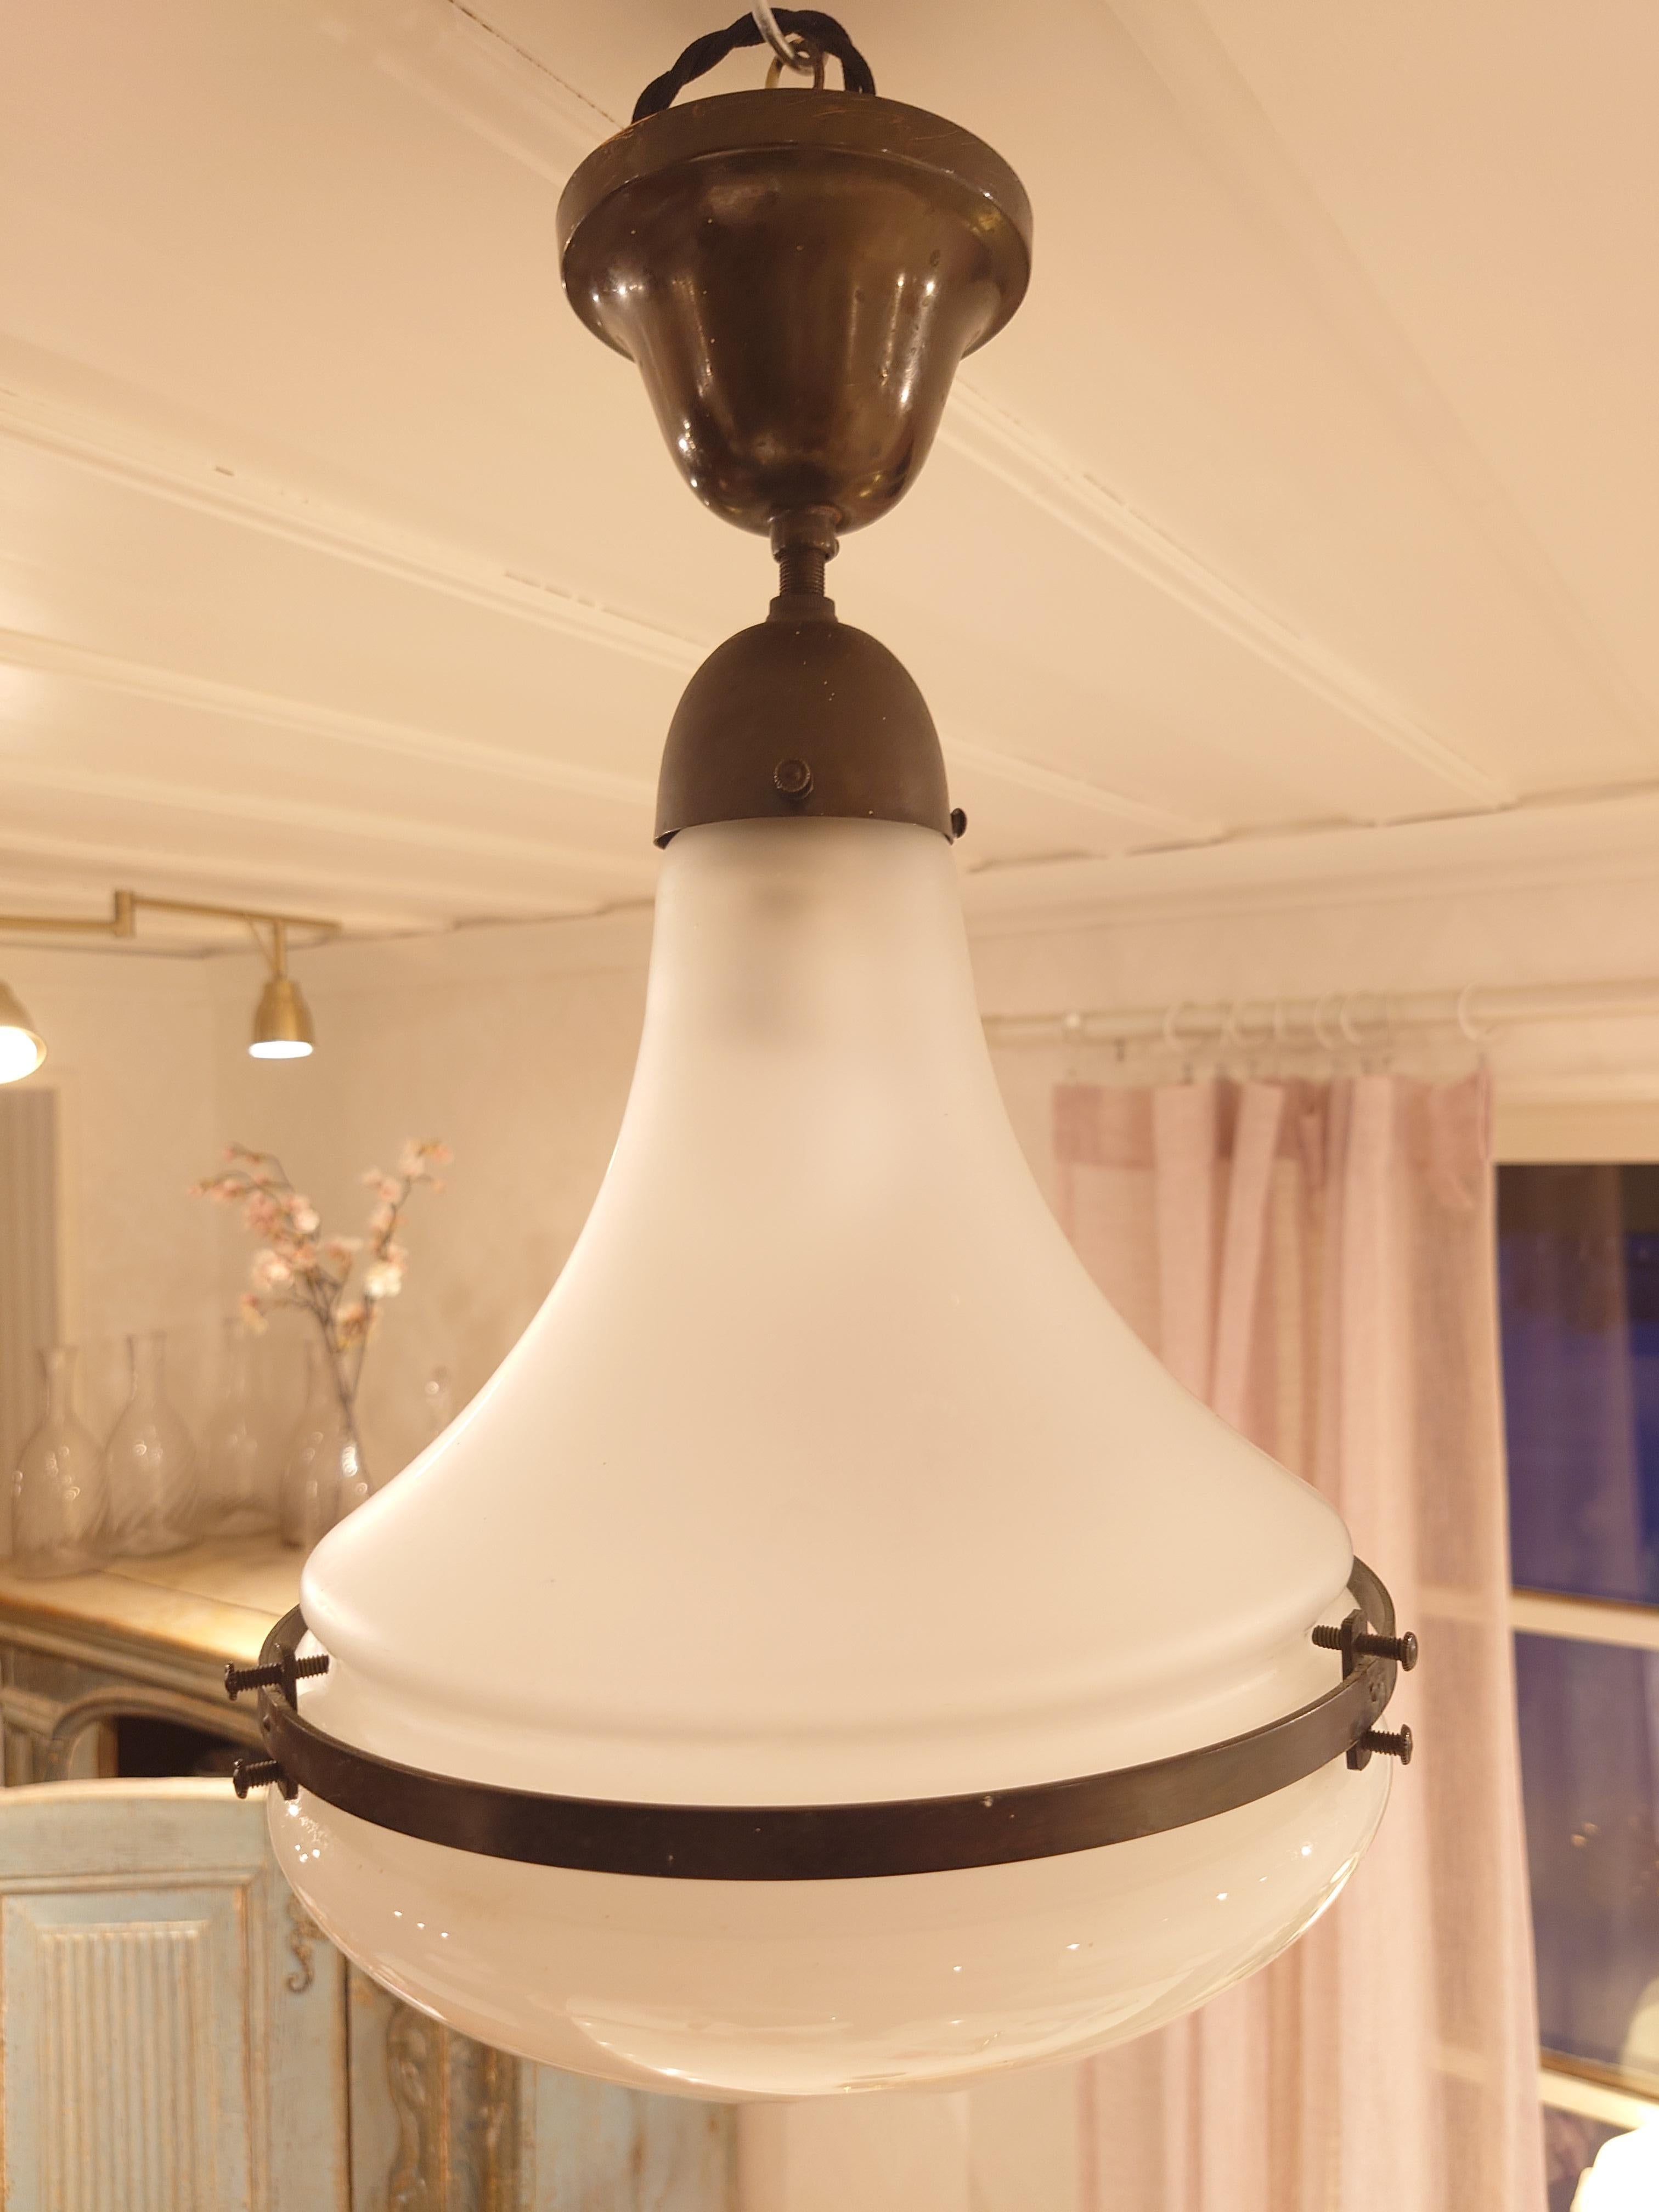 Early 20th Century German Art Nouveau Jugendstil Siemens Luzette Pendant Lamp by Peter Behrens For Sale